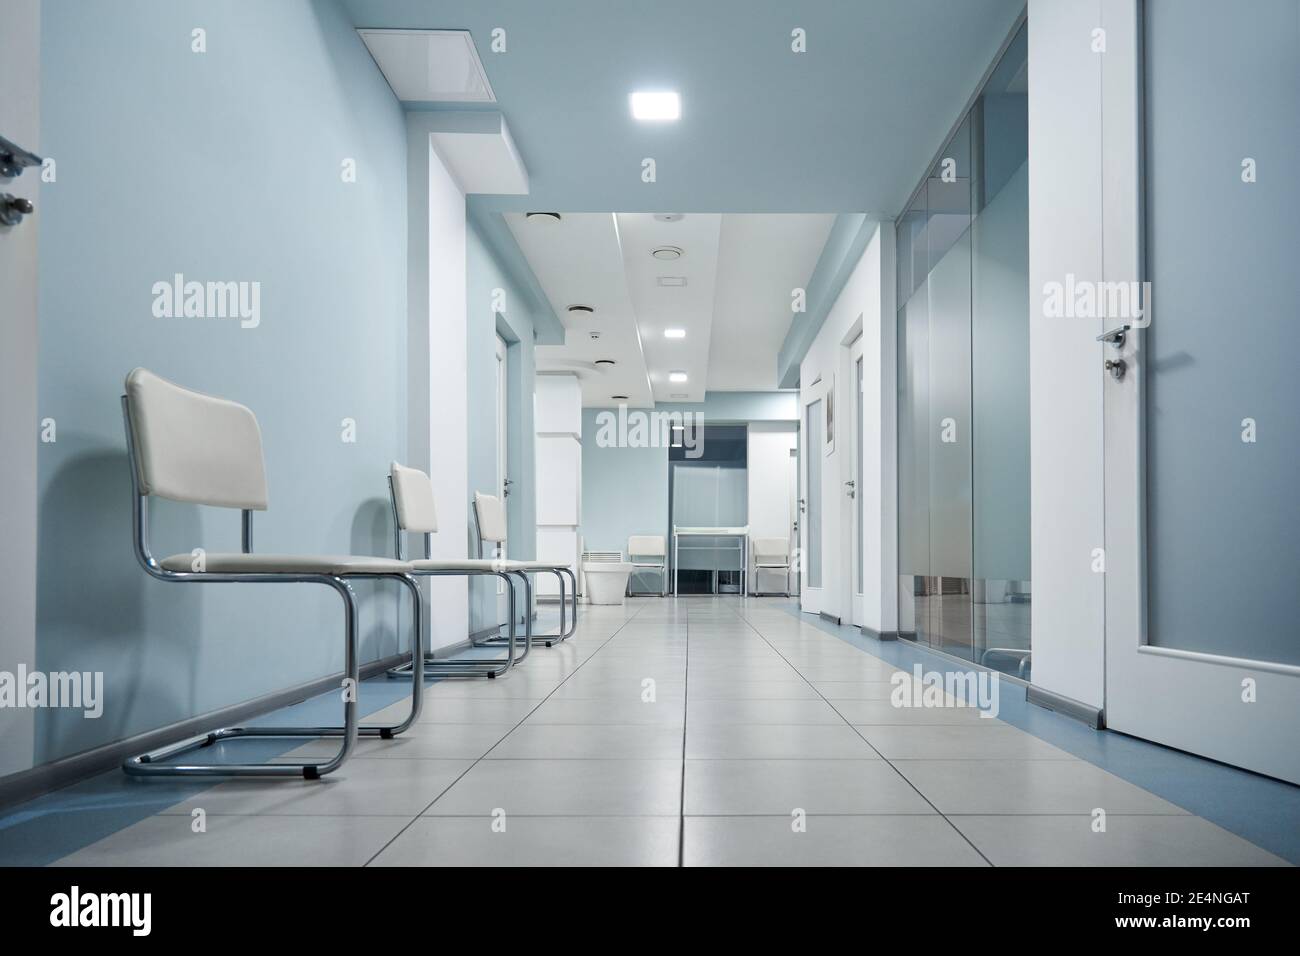 hospital hallway background